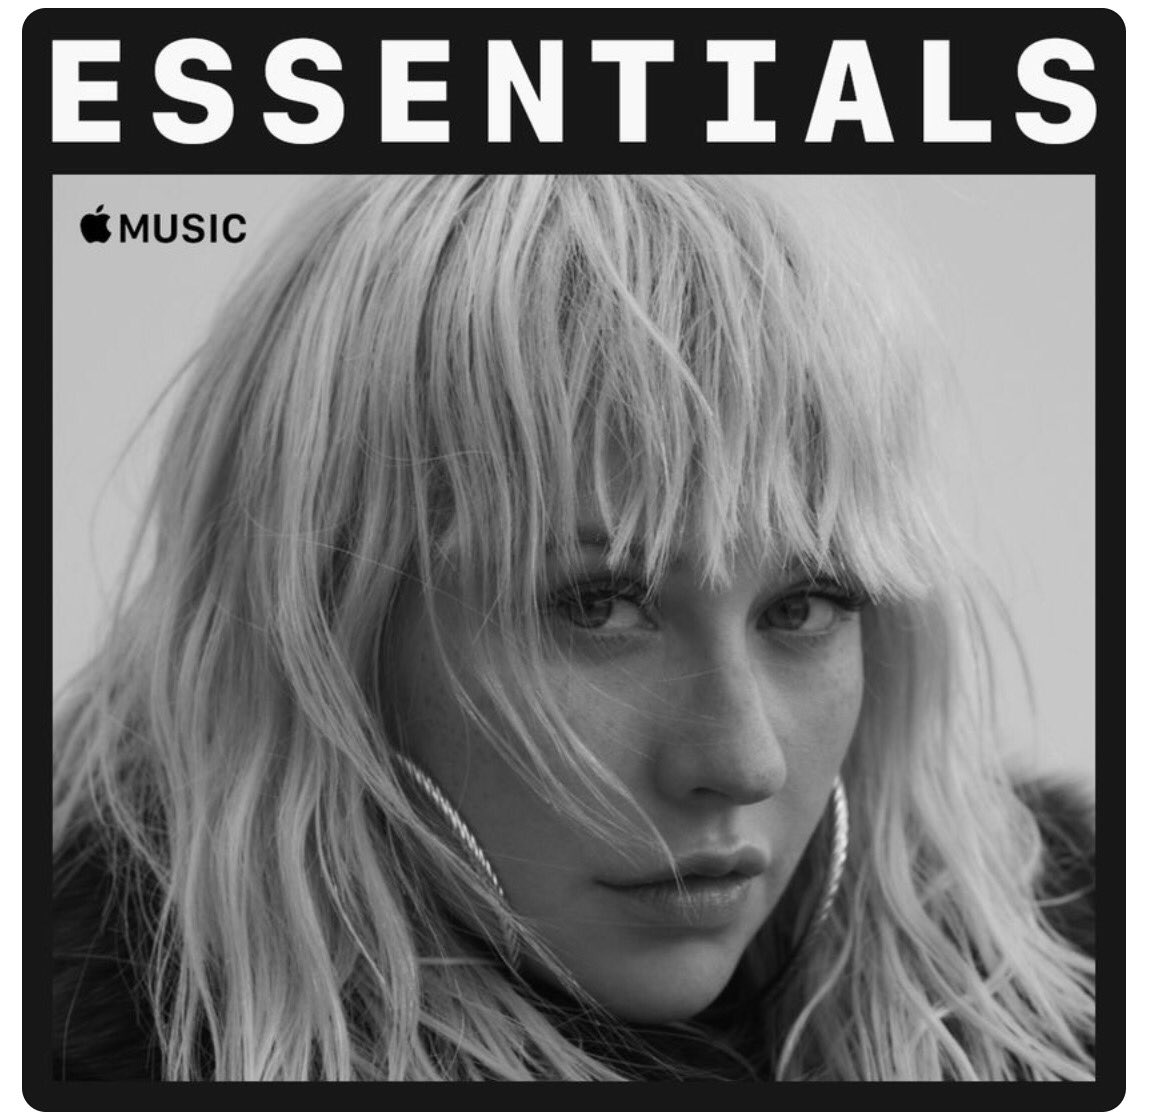 Essential X @AppleMusic
https://t.co/Xr3kuWum0A
#FallInLine #xtinademi_BBMAs https://t.co/VlvdYKjabk